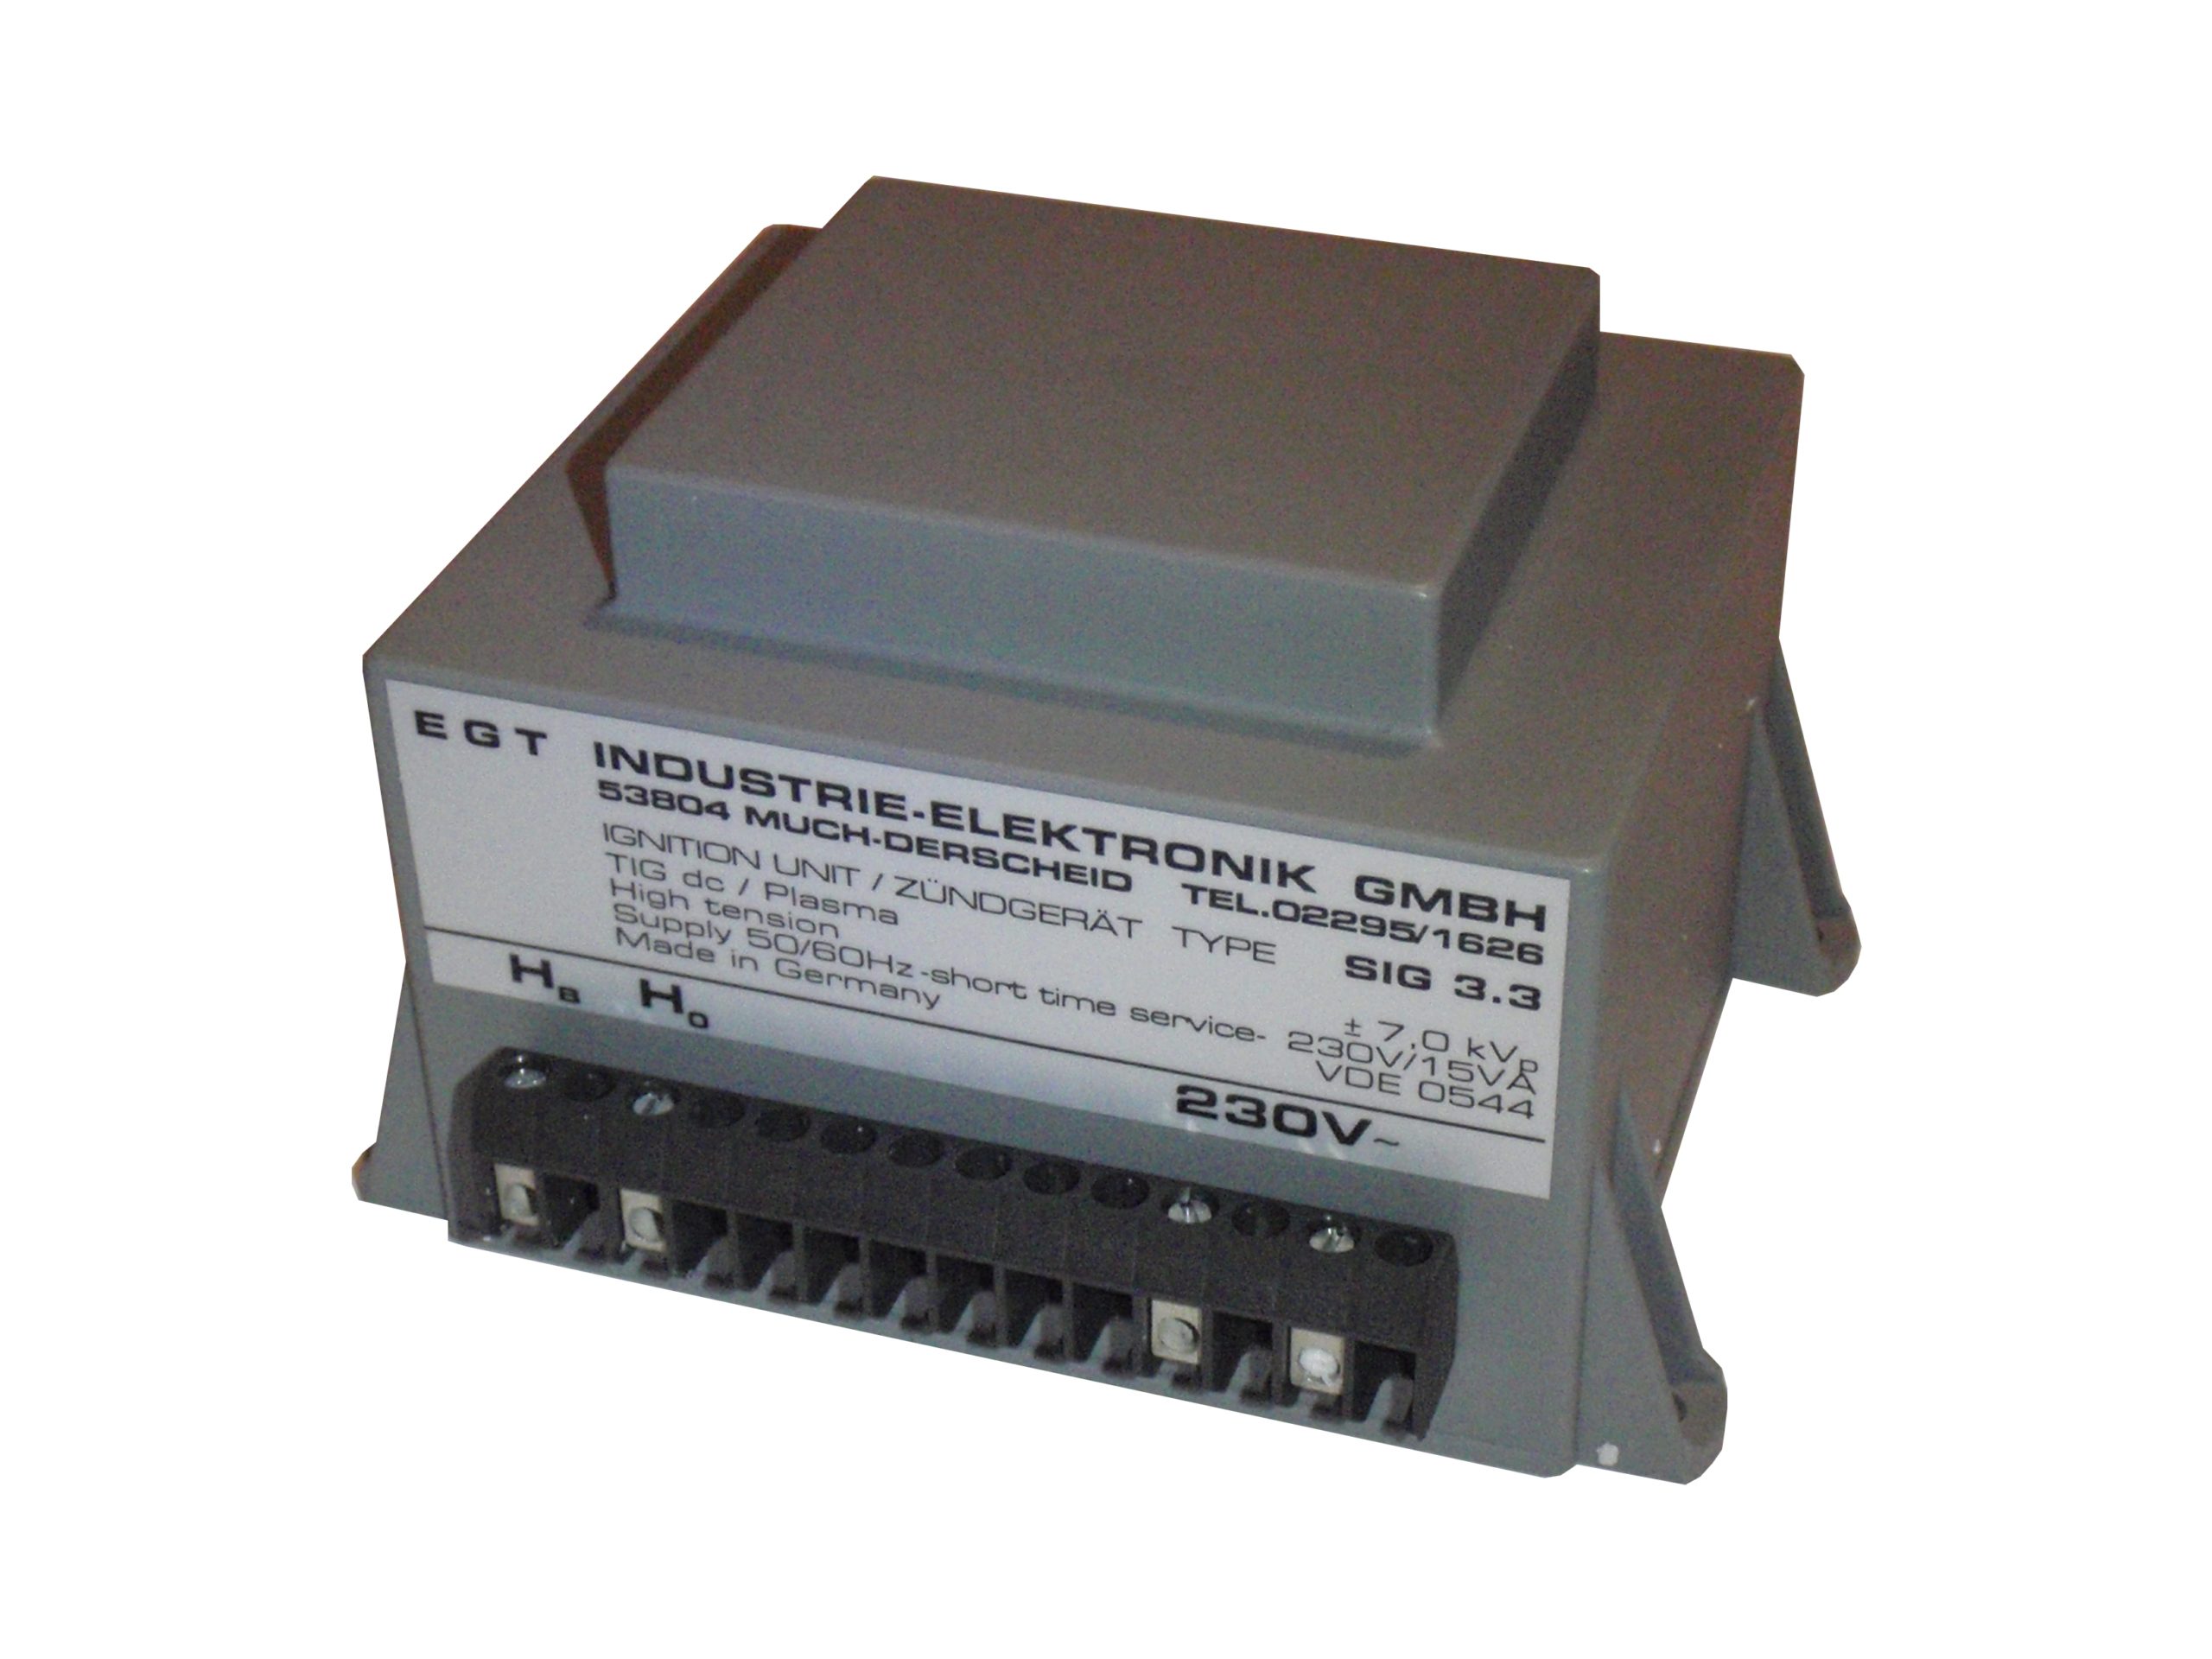 EGT Industrie-elektronik SIG 3.03 DC Controlador